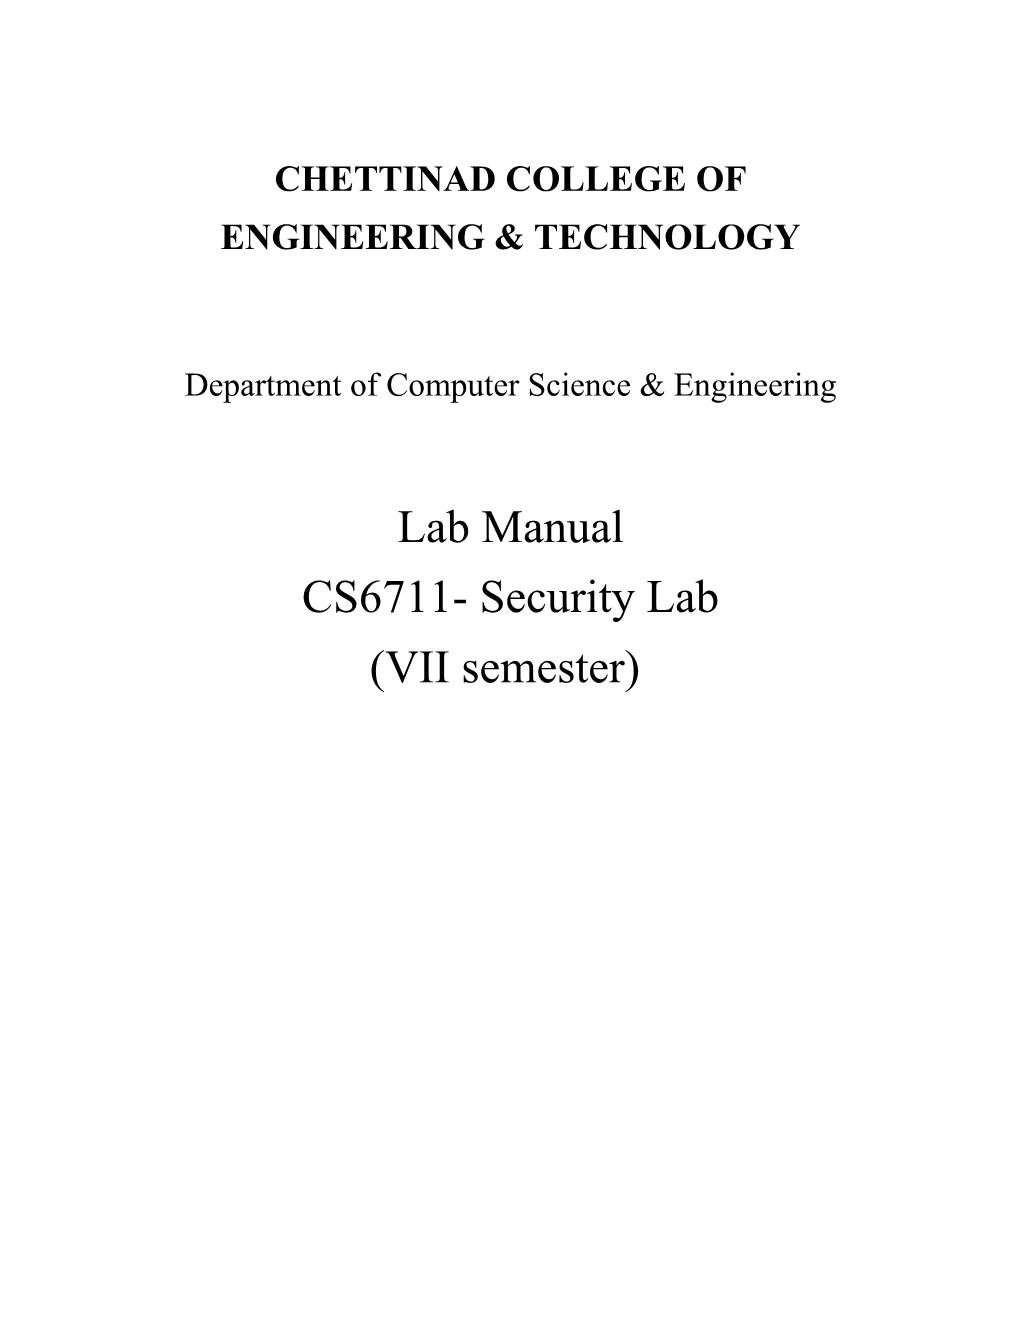 Chettinad College of Engineering & Technology